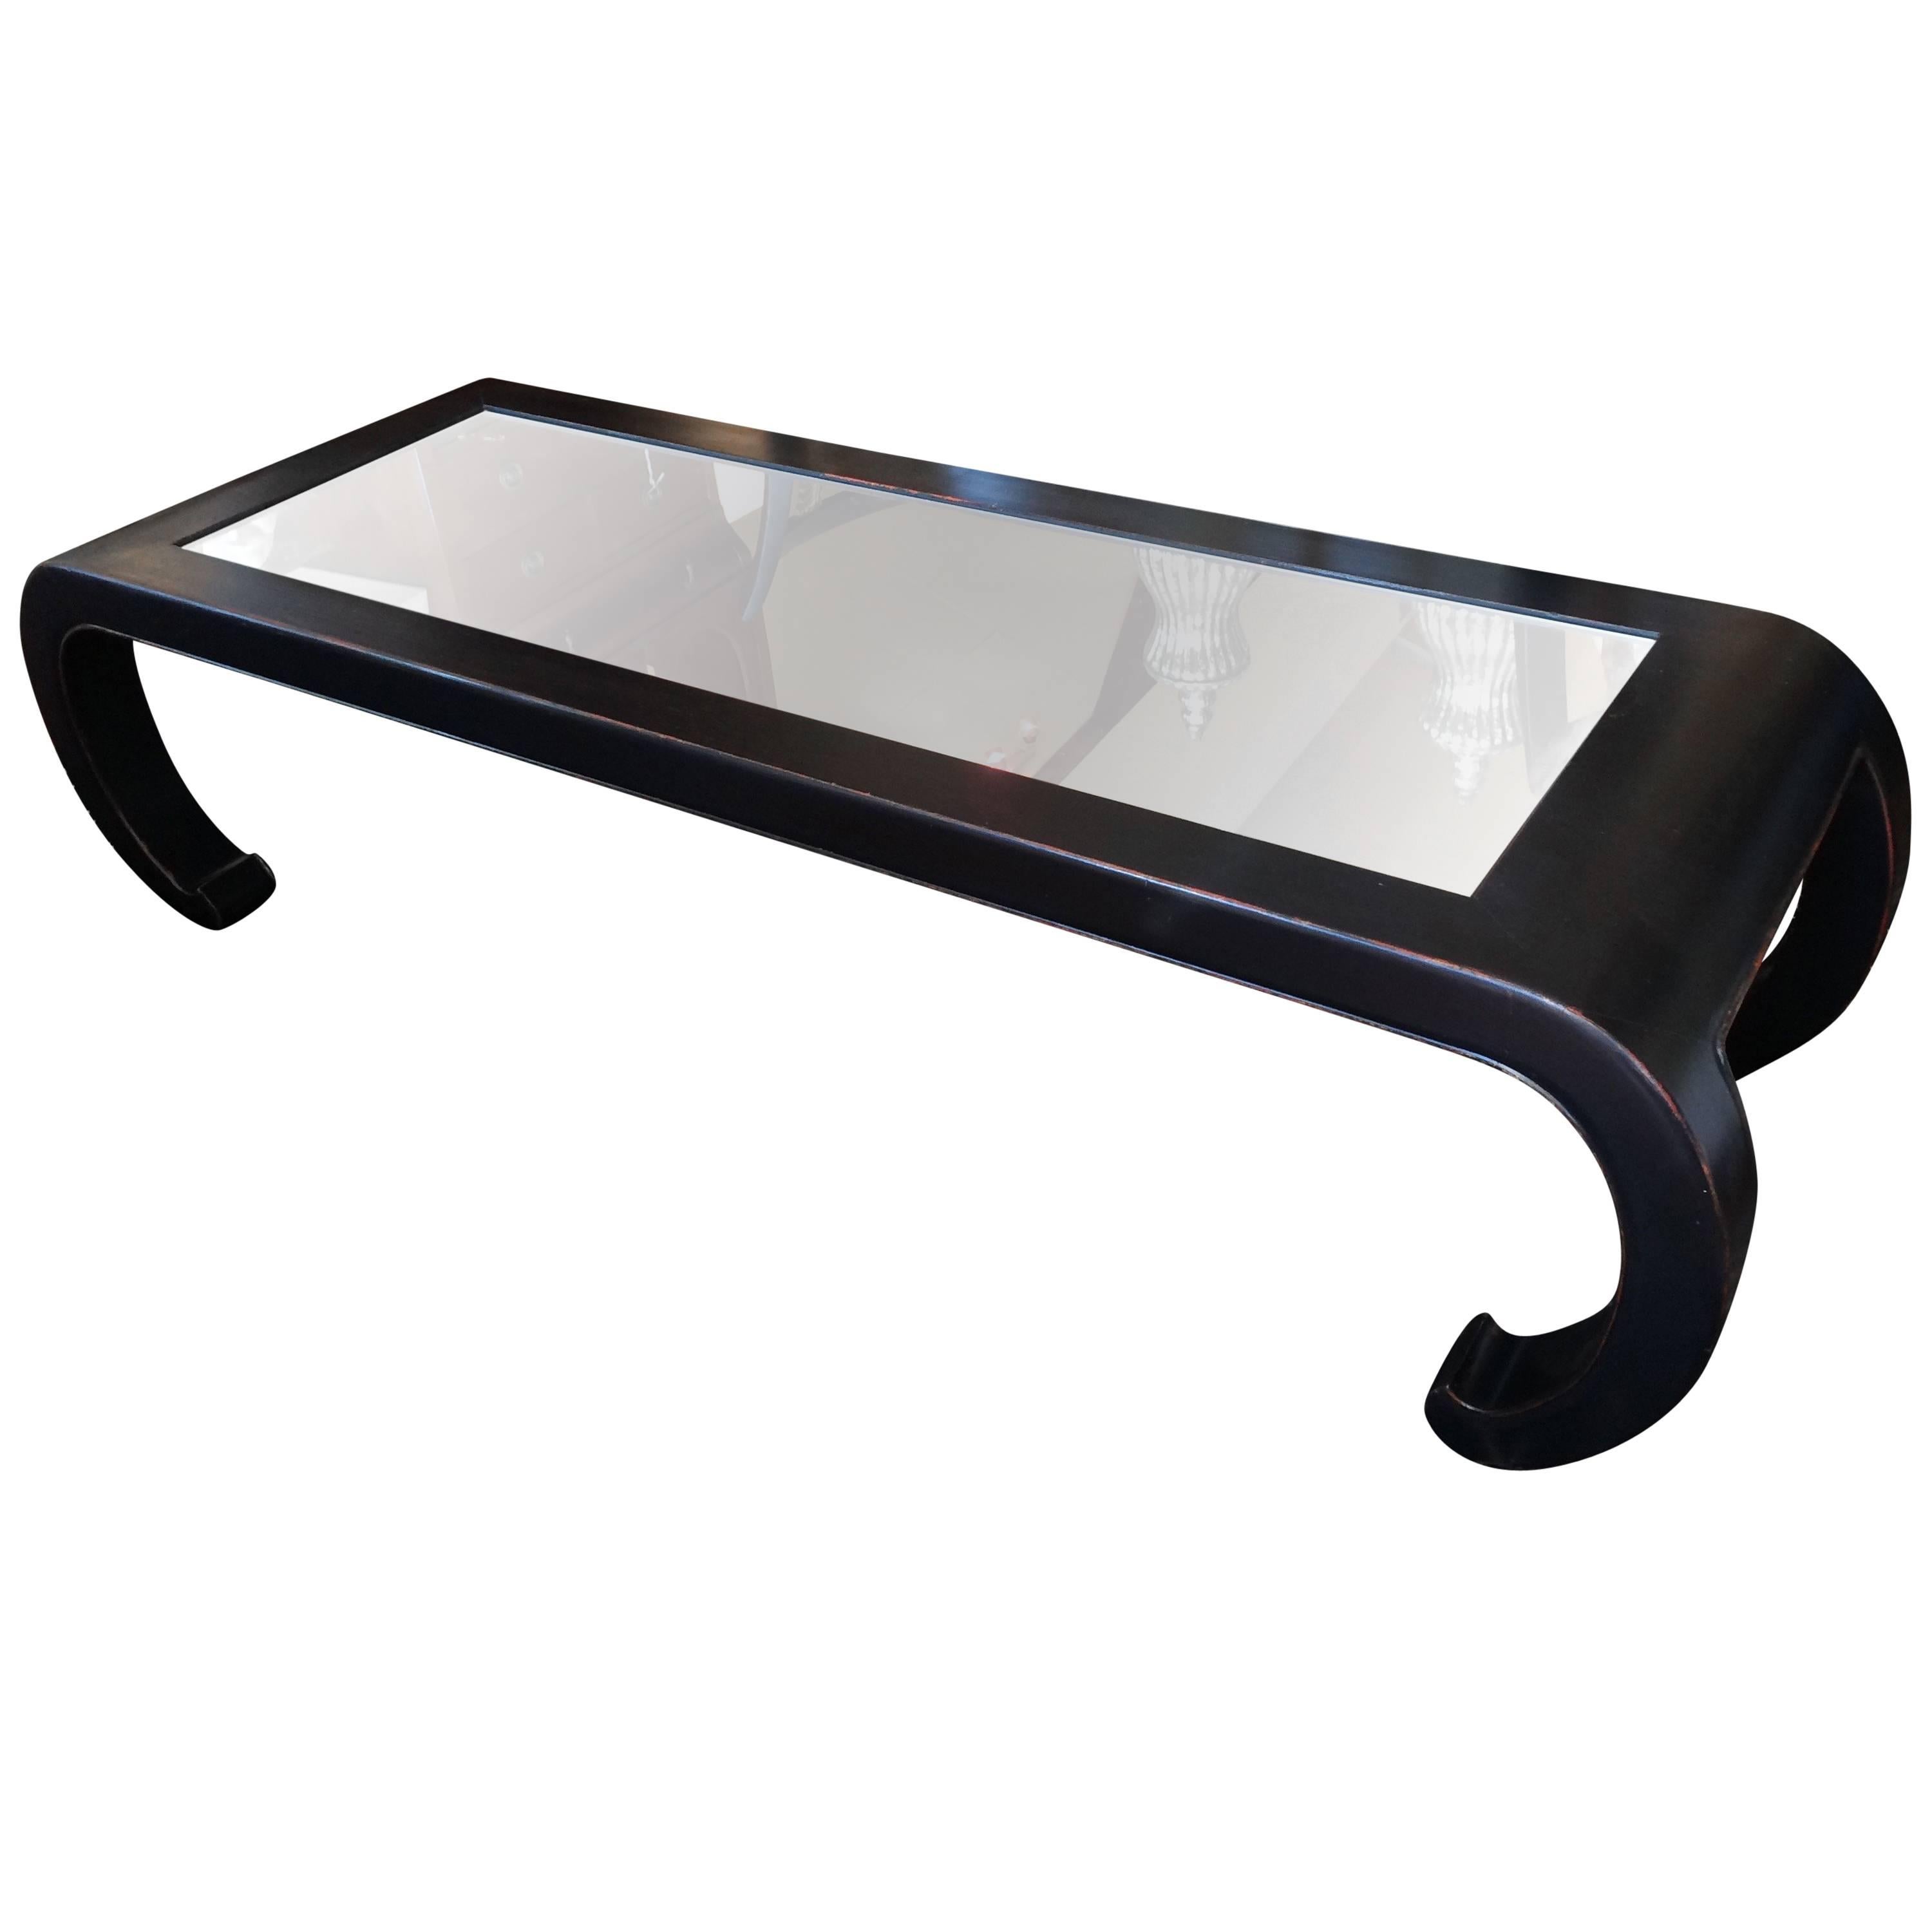 Sleek Ebonized Wood and Mirrored Coffee Table